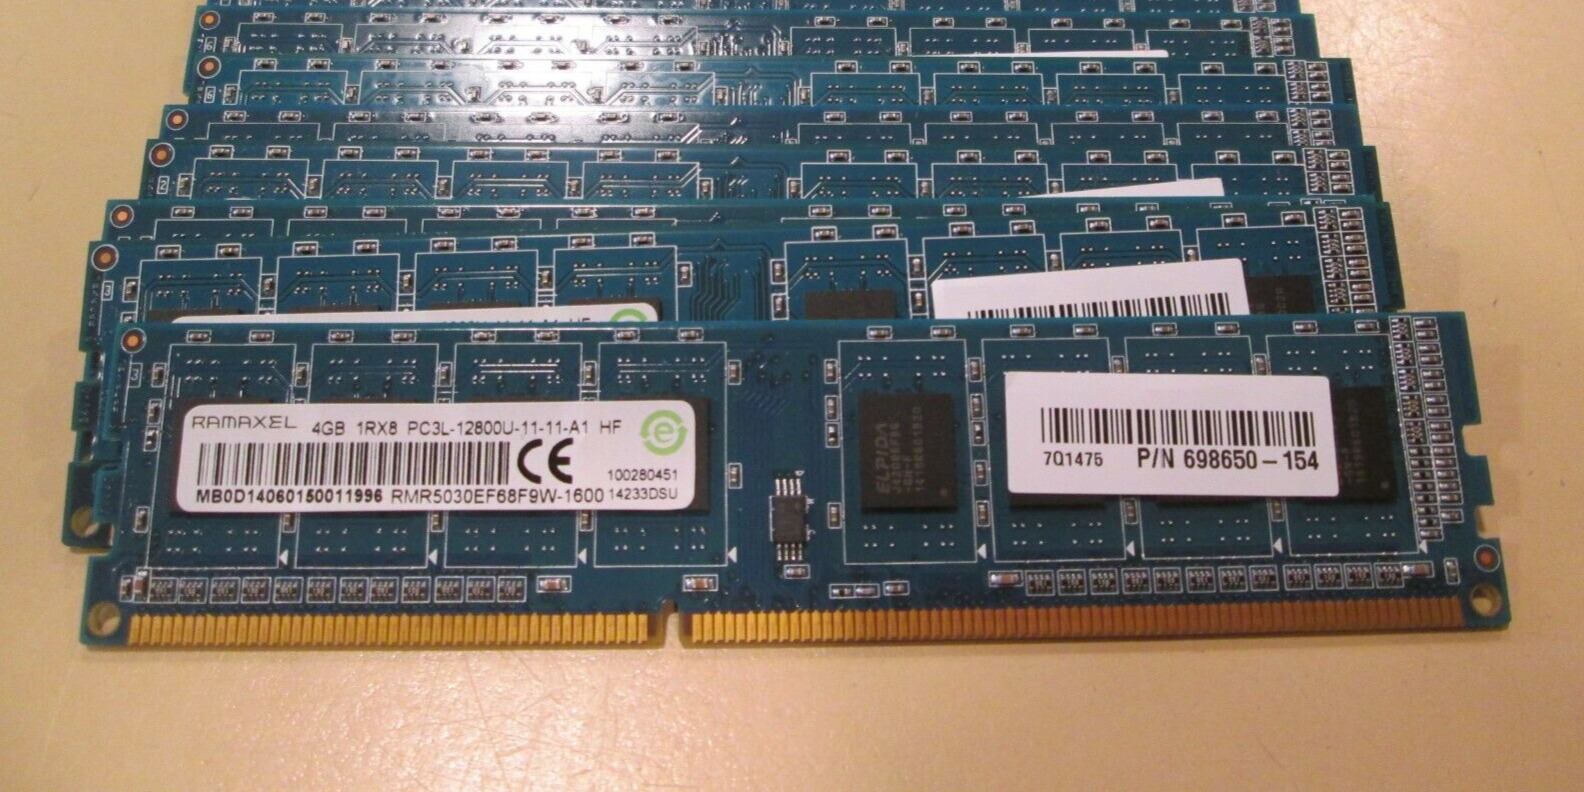 Lot of 2 RAMAXEL 4GB DDR3 PC3-12800U Desktop Memory RAM RMR5030EF68F9W-1600